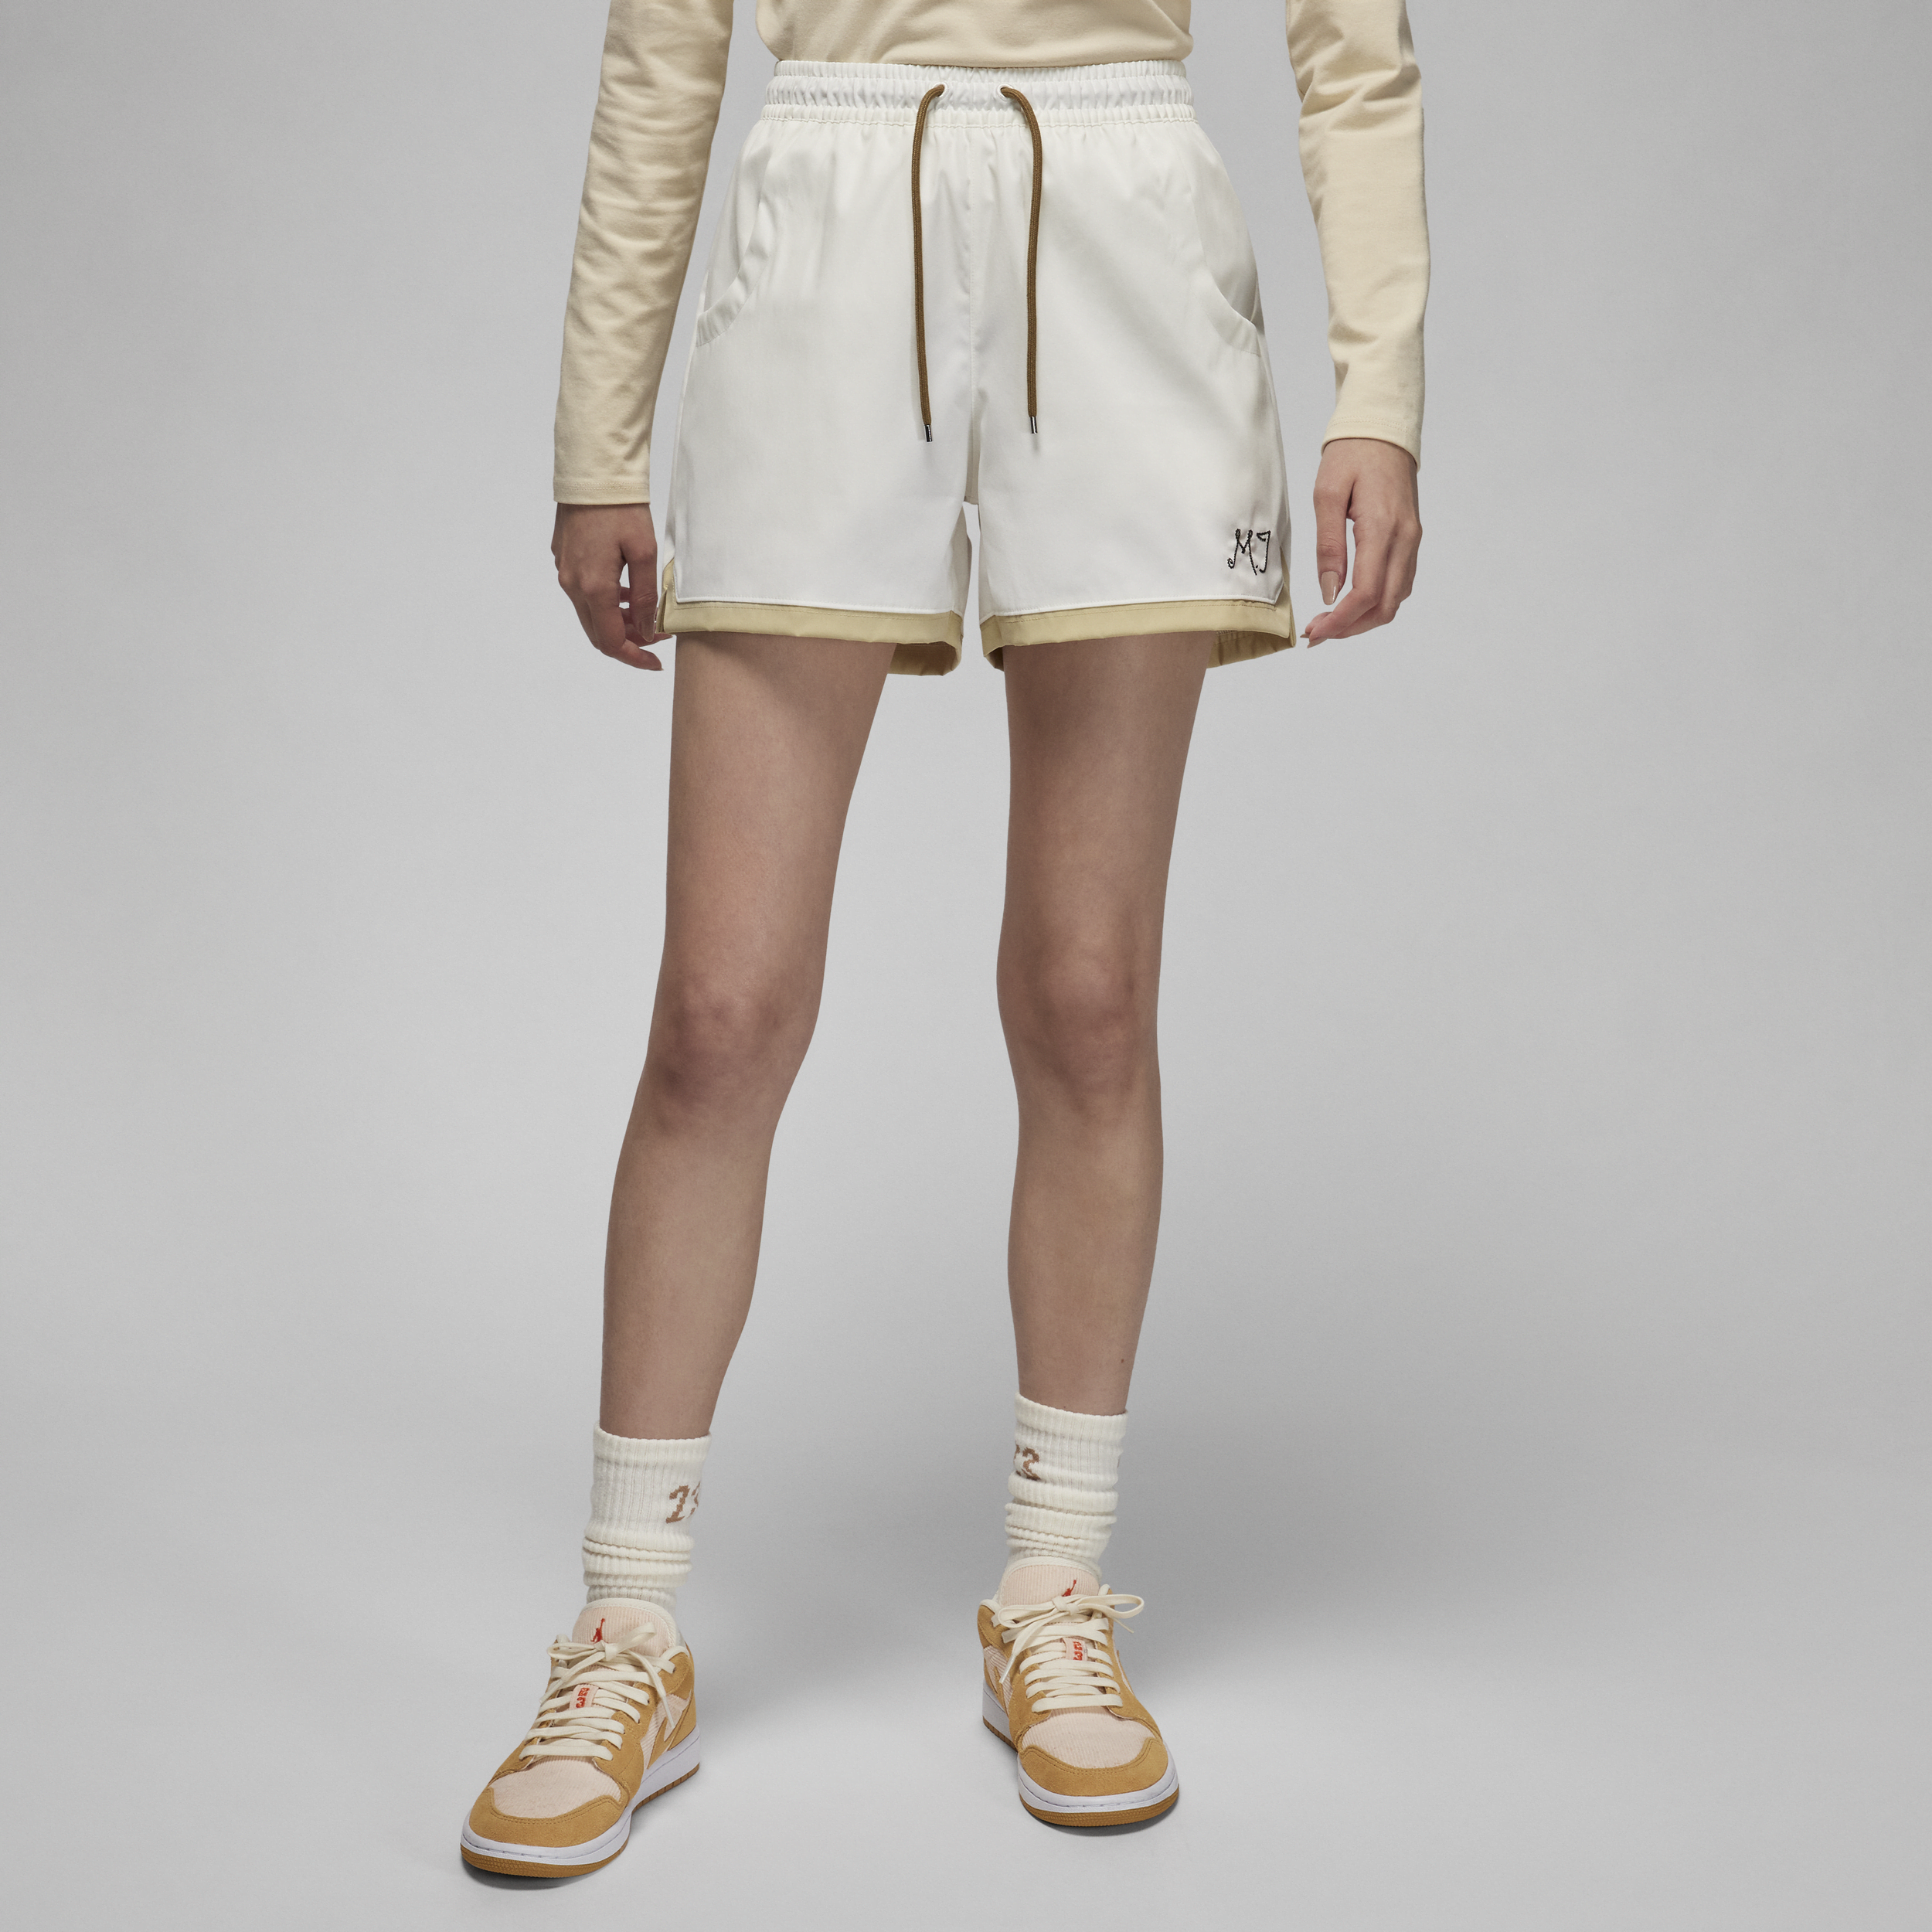 Nike Shorts in tessuto Jordan – Donna - Bianco